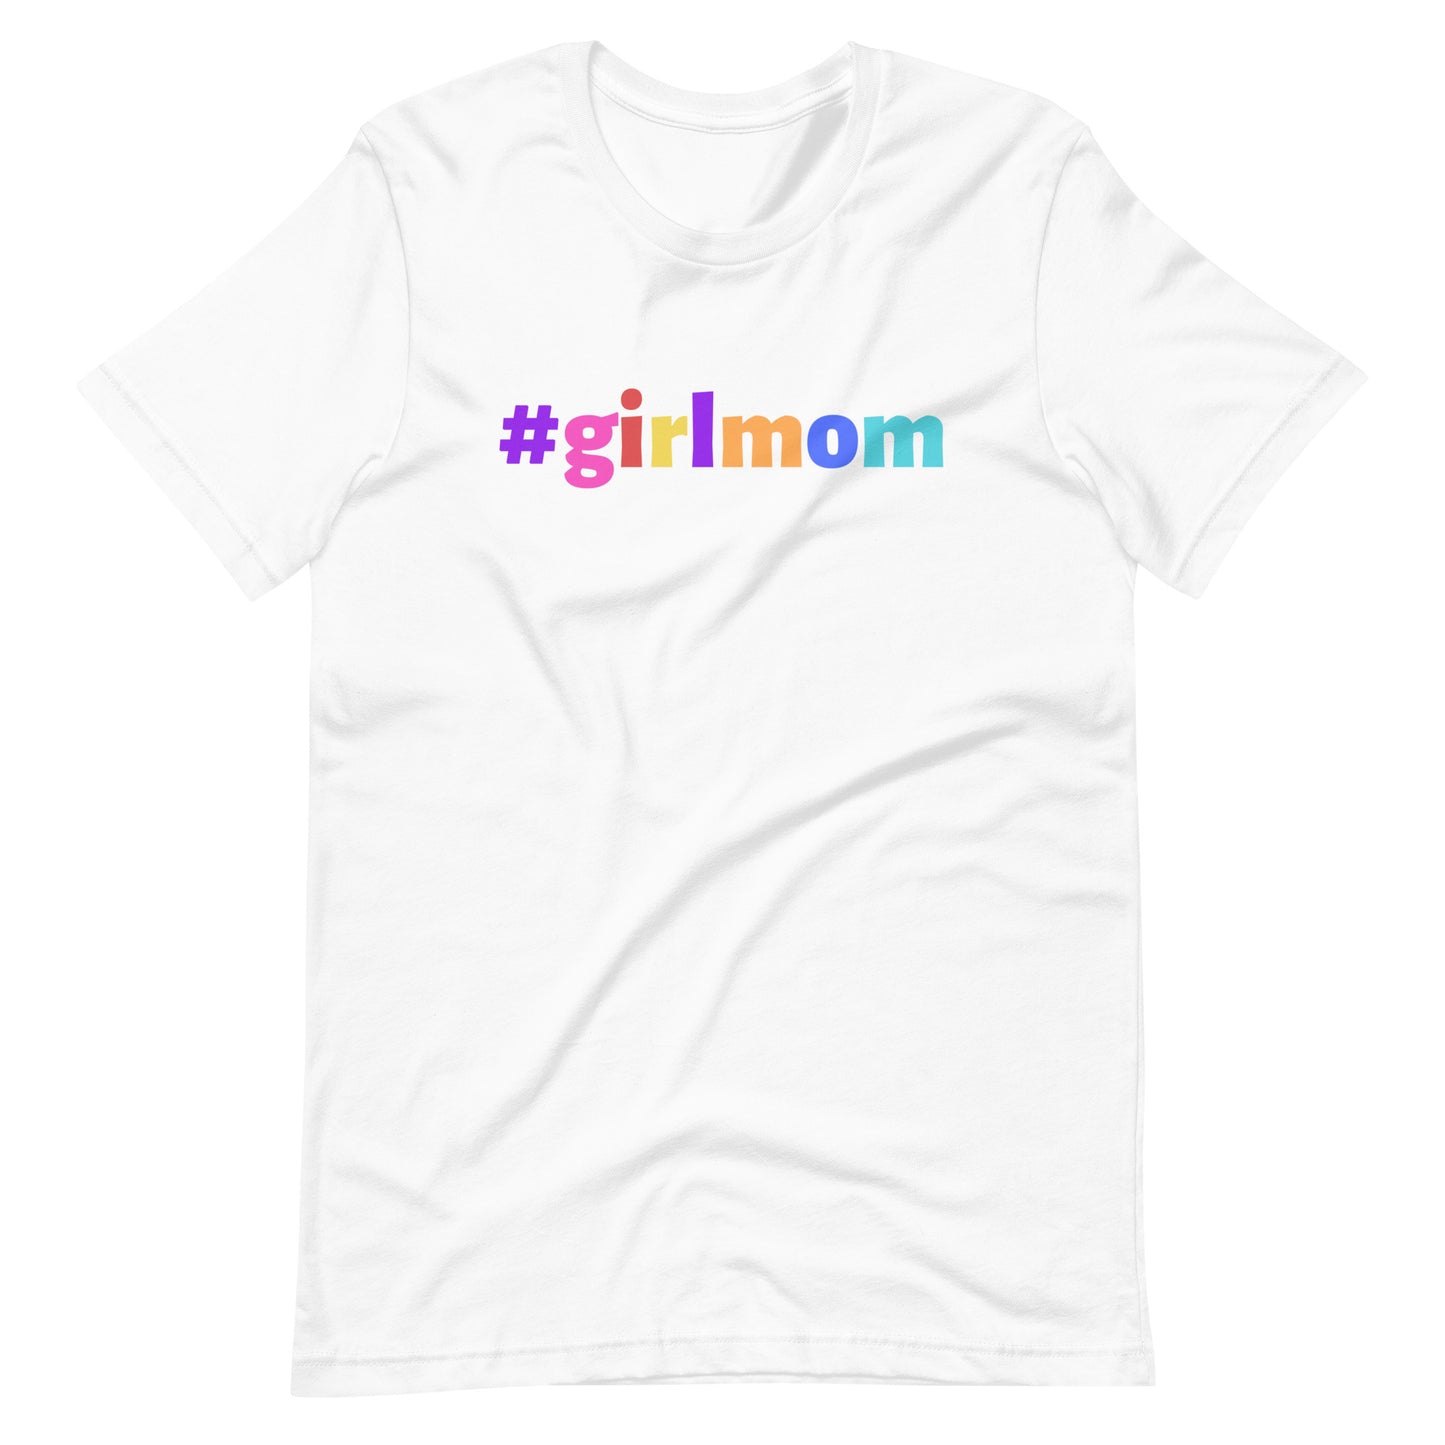 #girlmom t-shirt multi-color letters